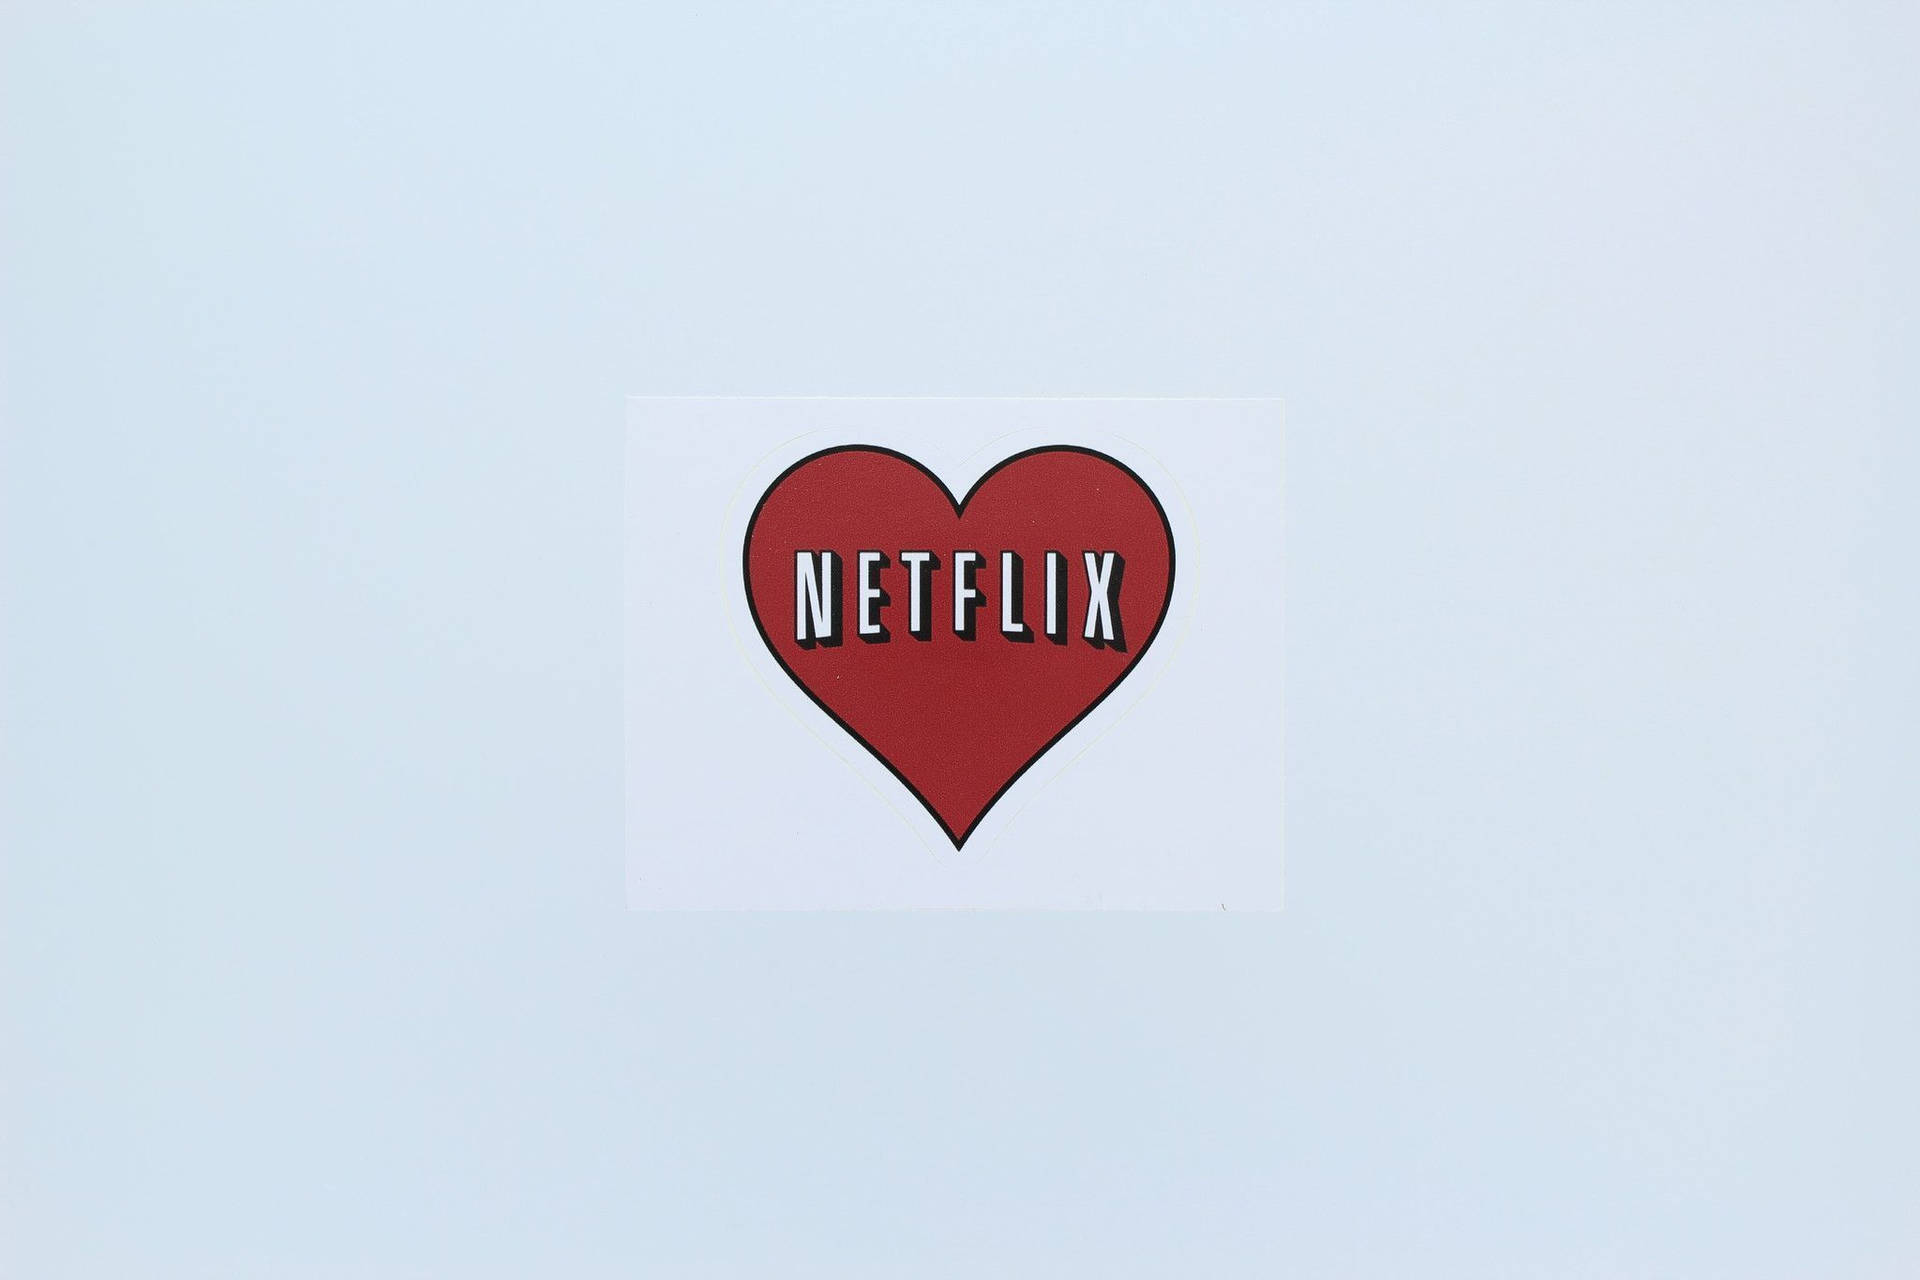 Netflix Love Heart Background